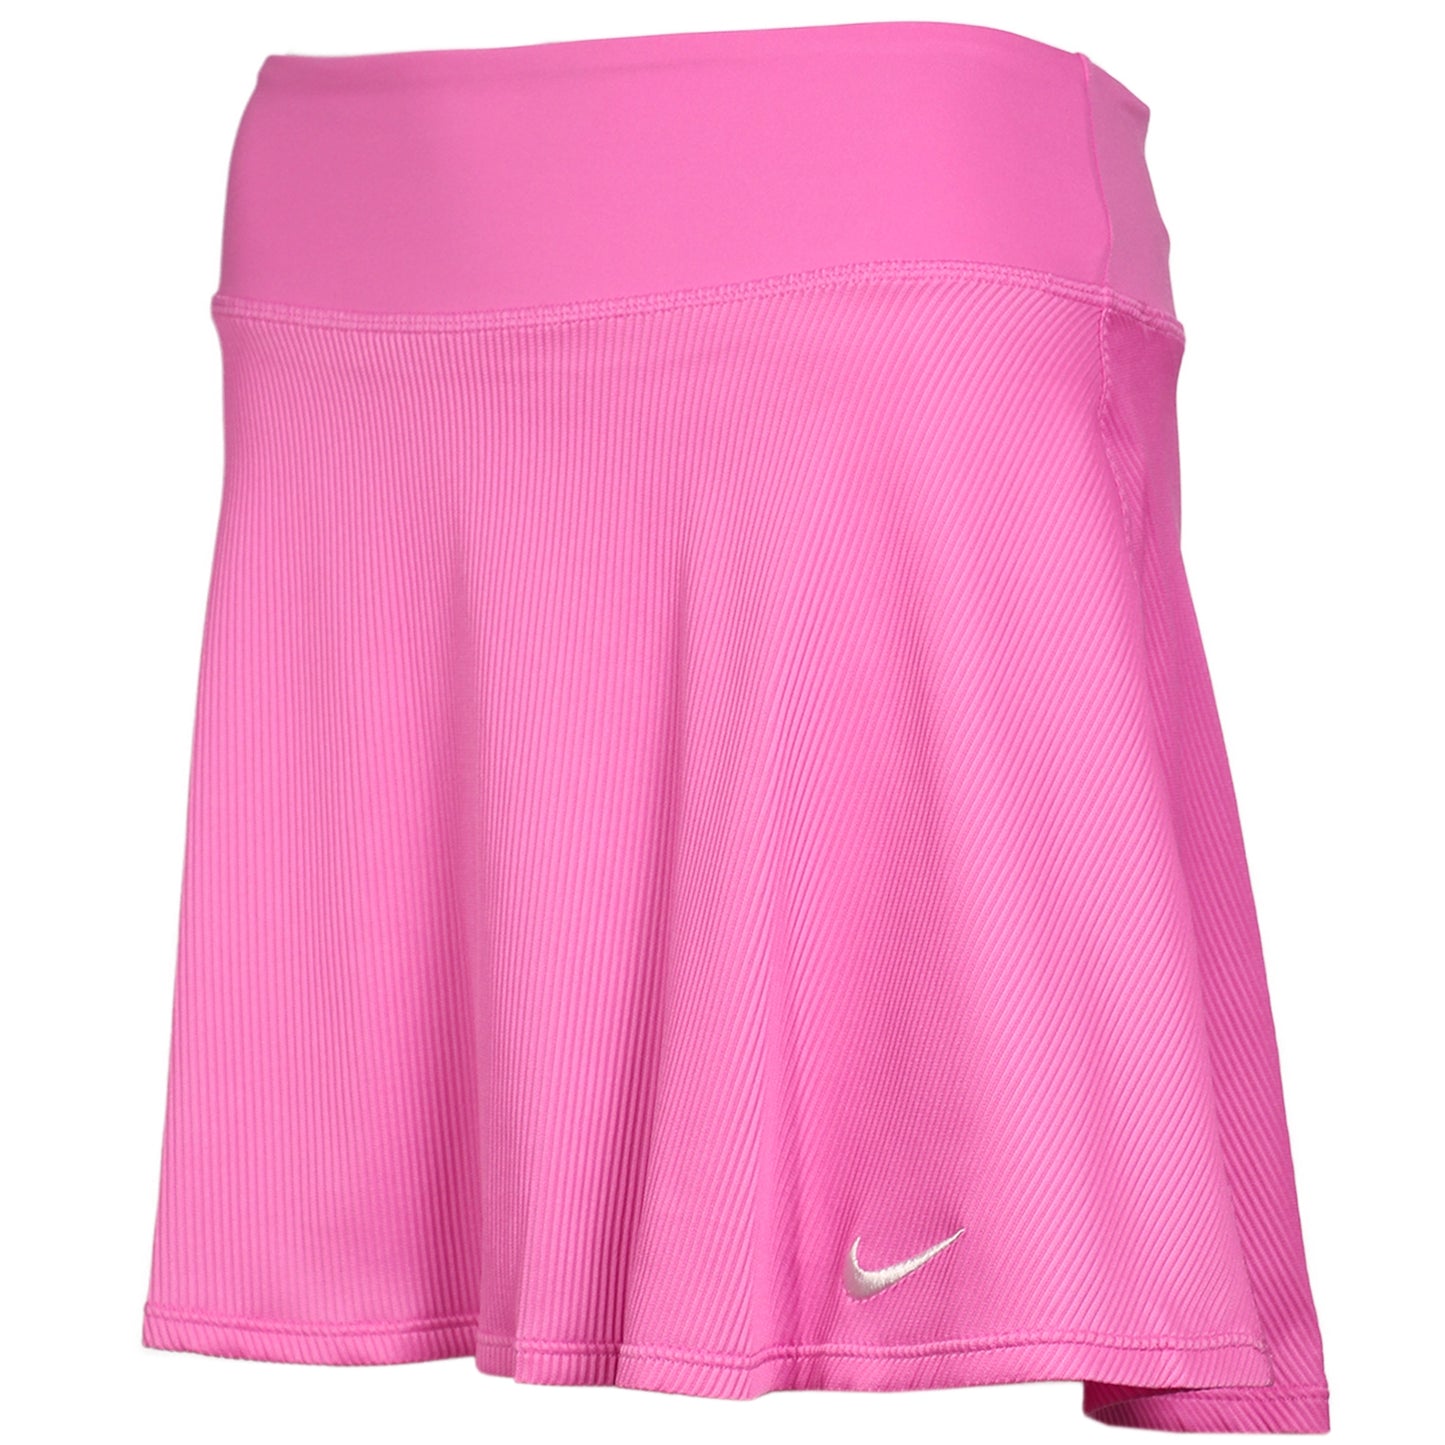 Nike Women's Advantage Regular Skirt FD6534-605